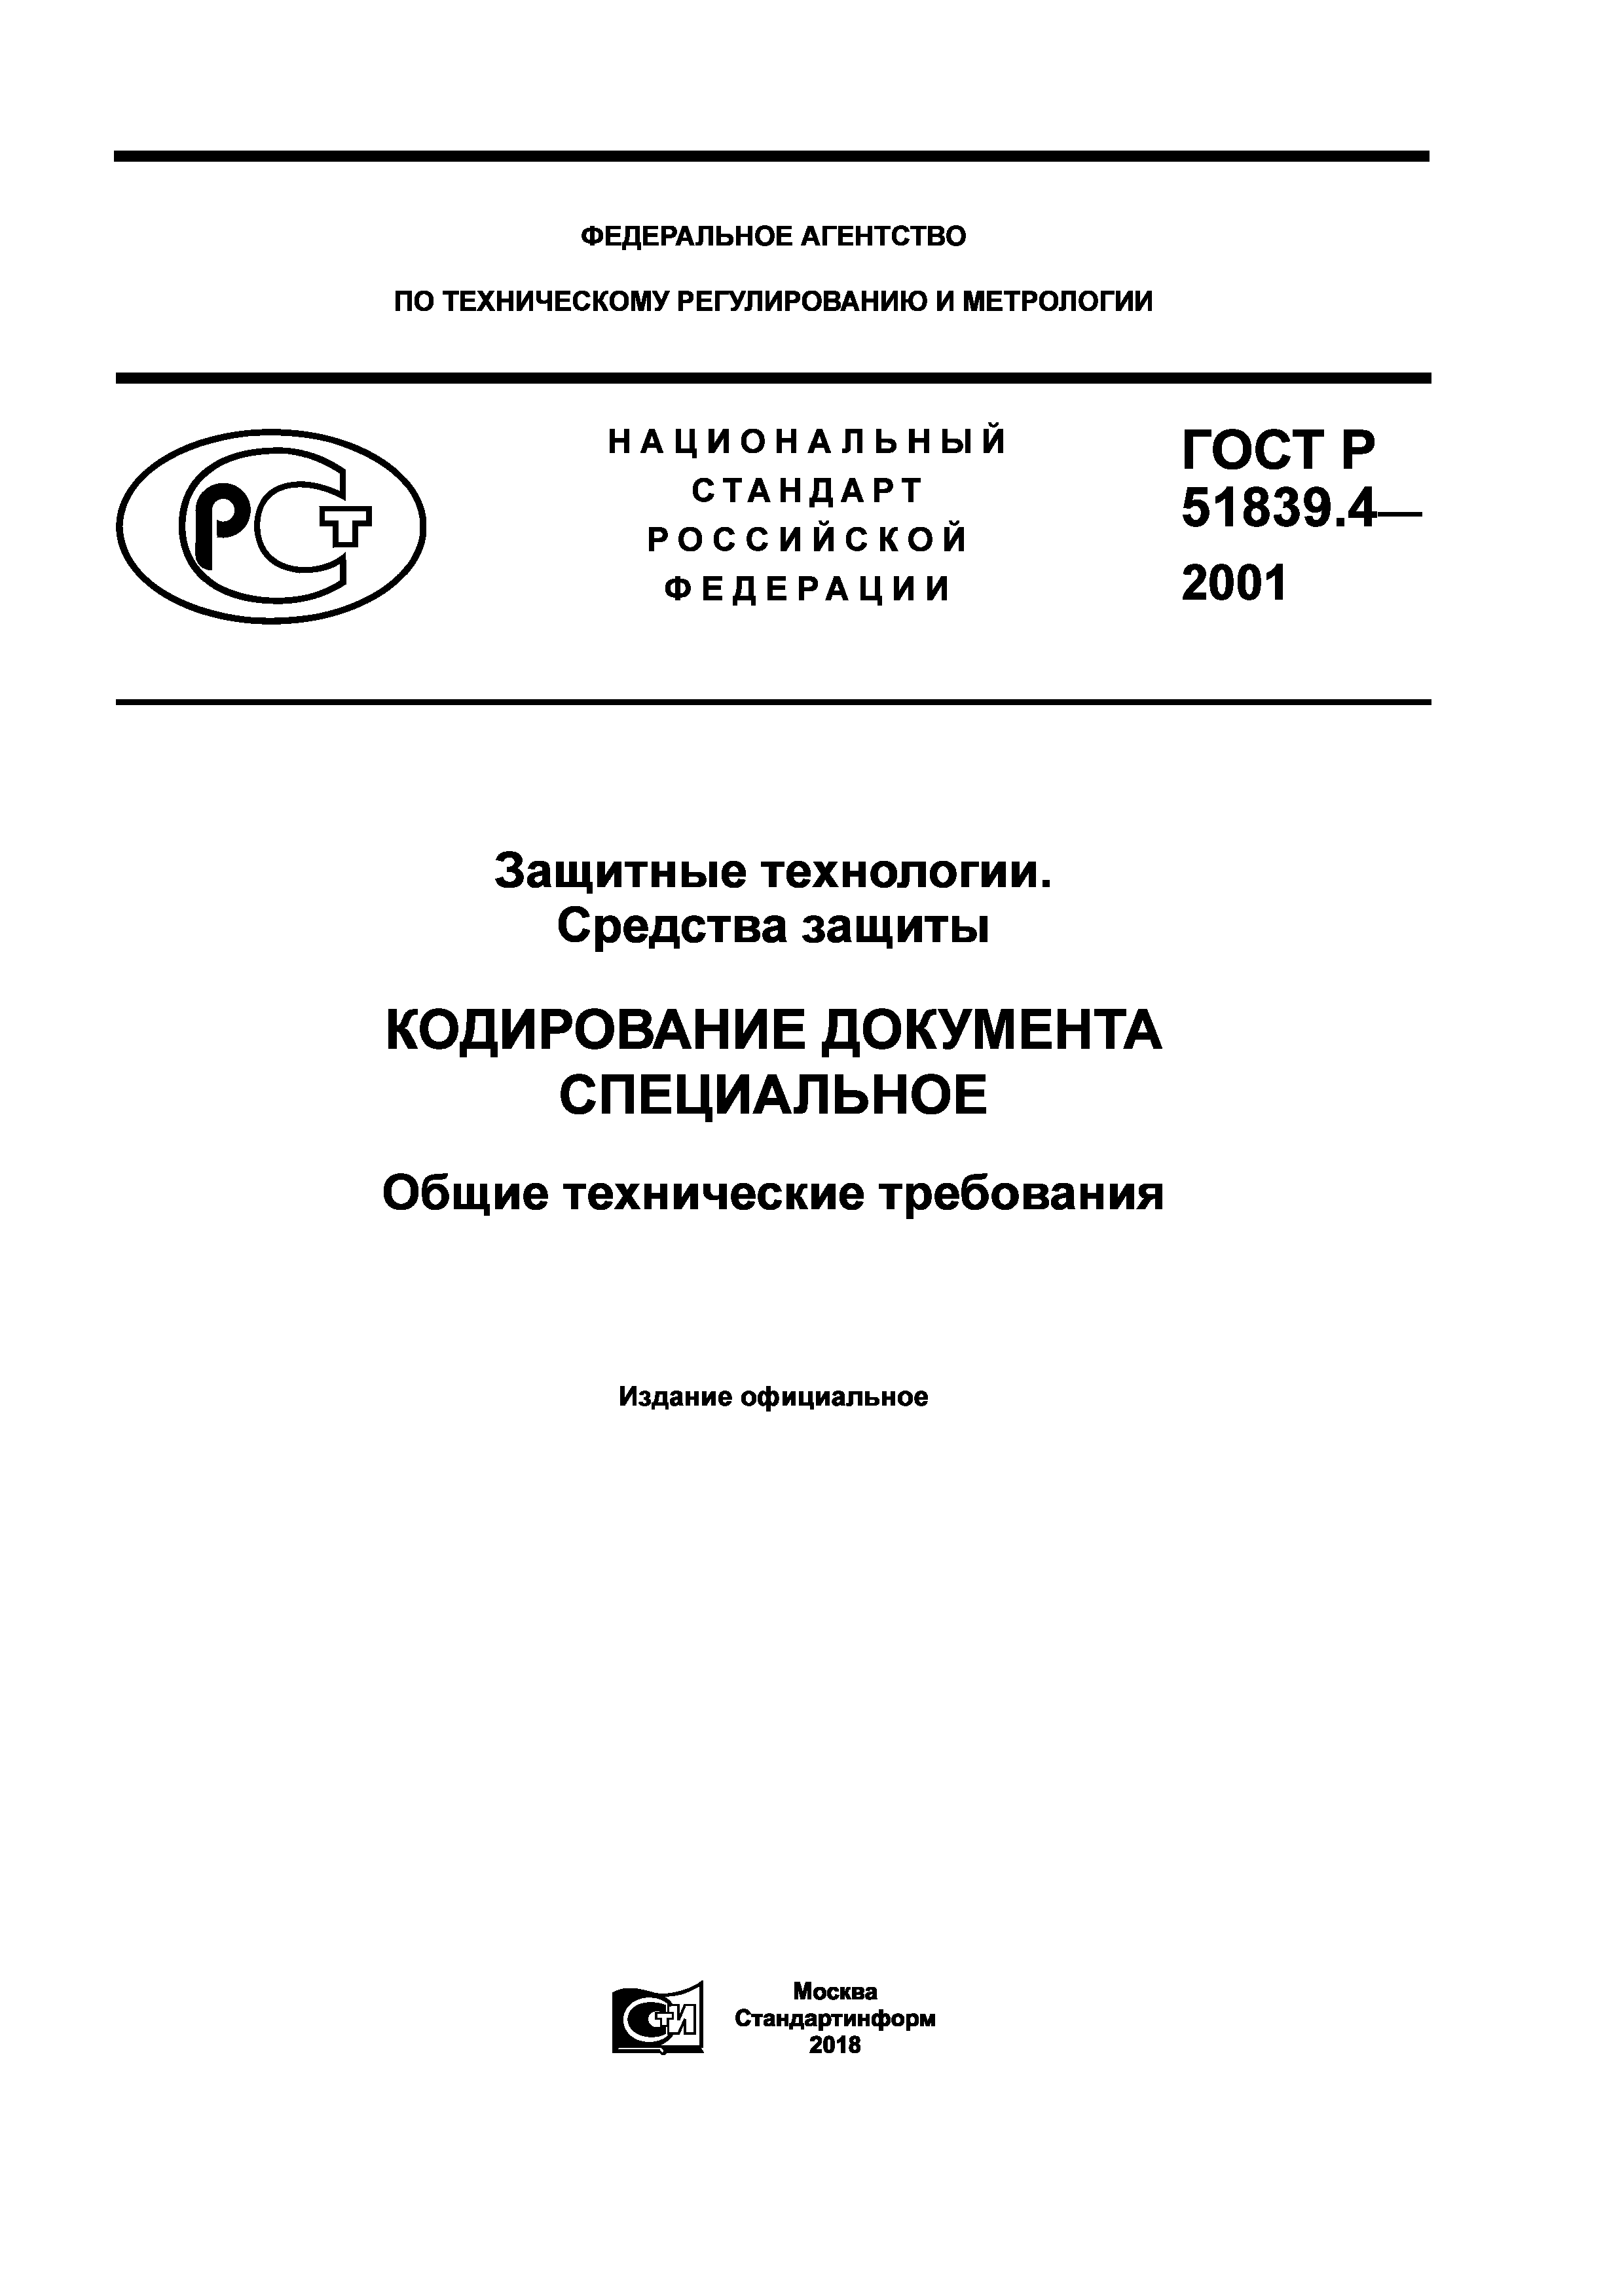 ГОСТ Р 51839.4-2001